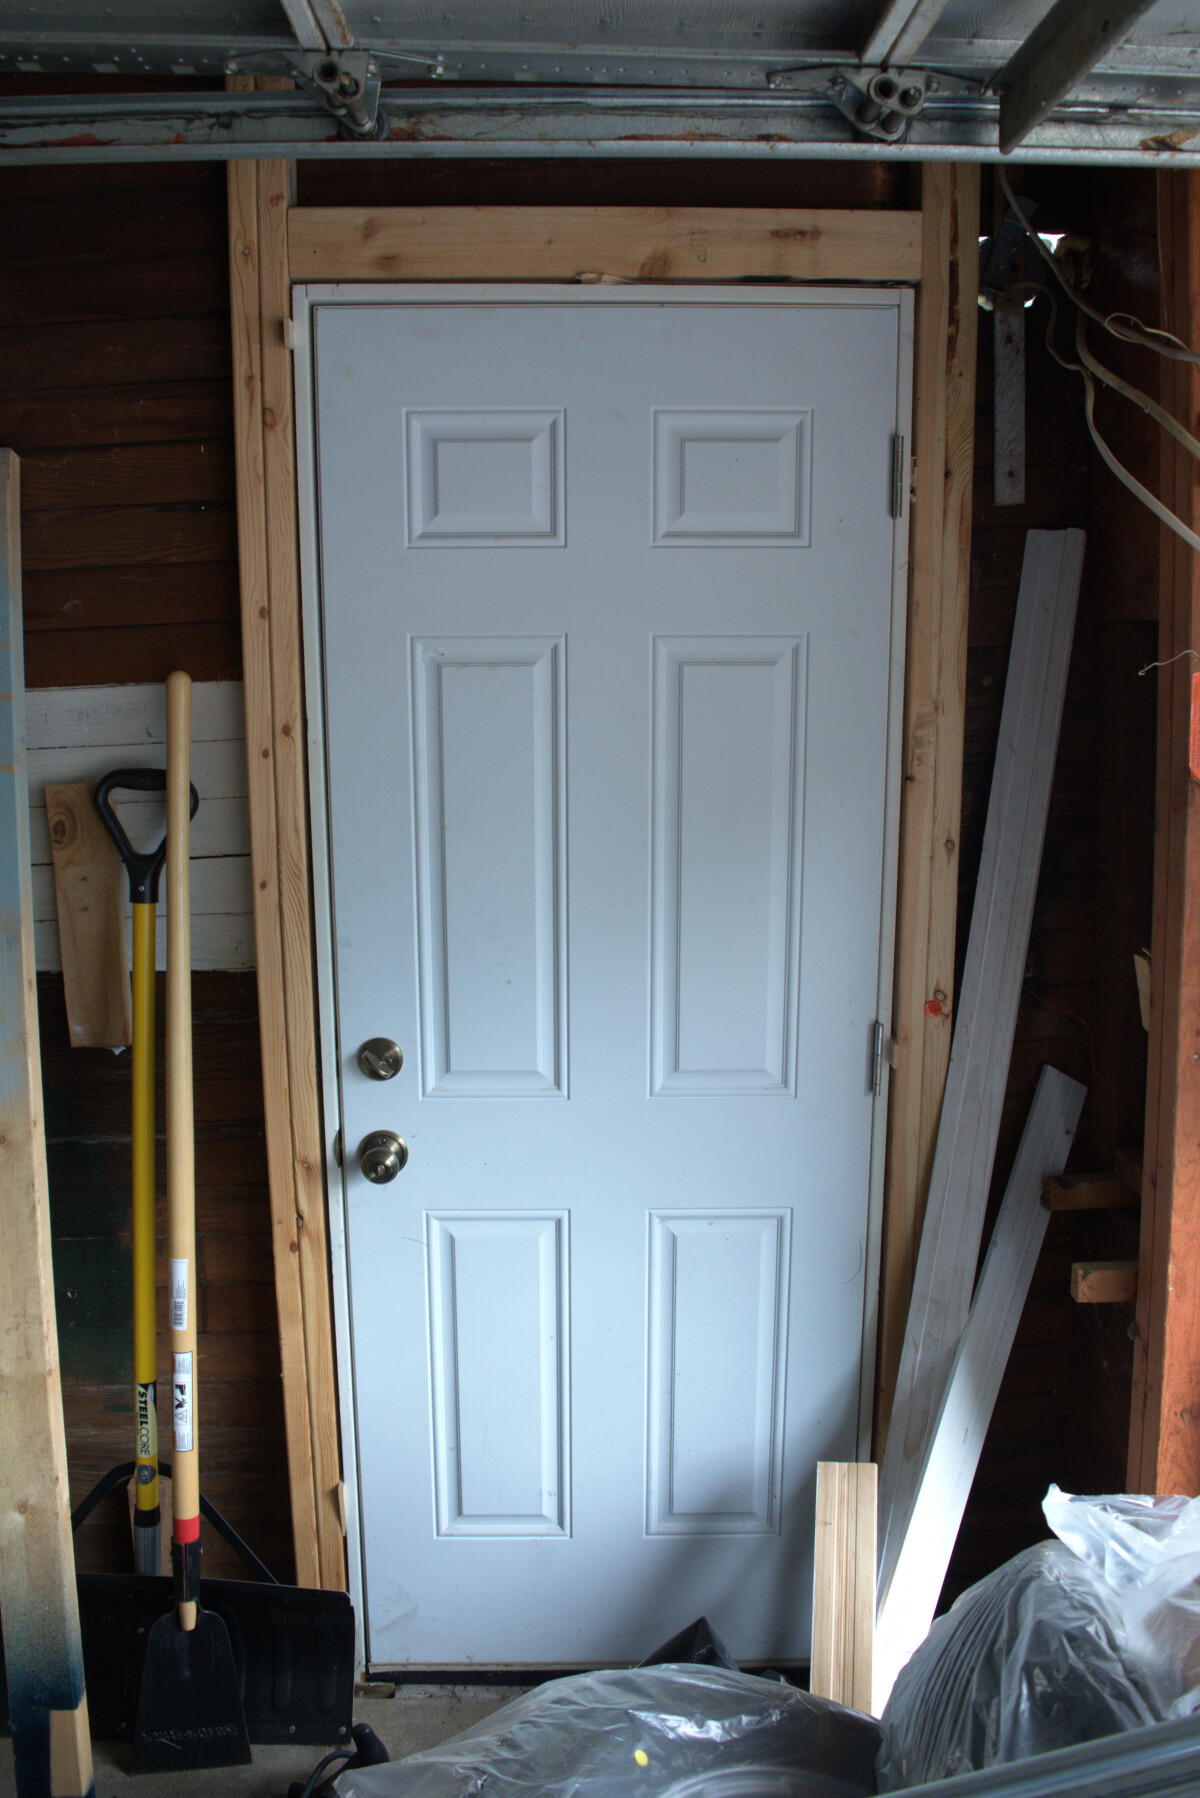 The new door viewed from the garage interior